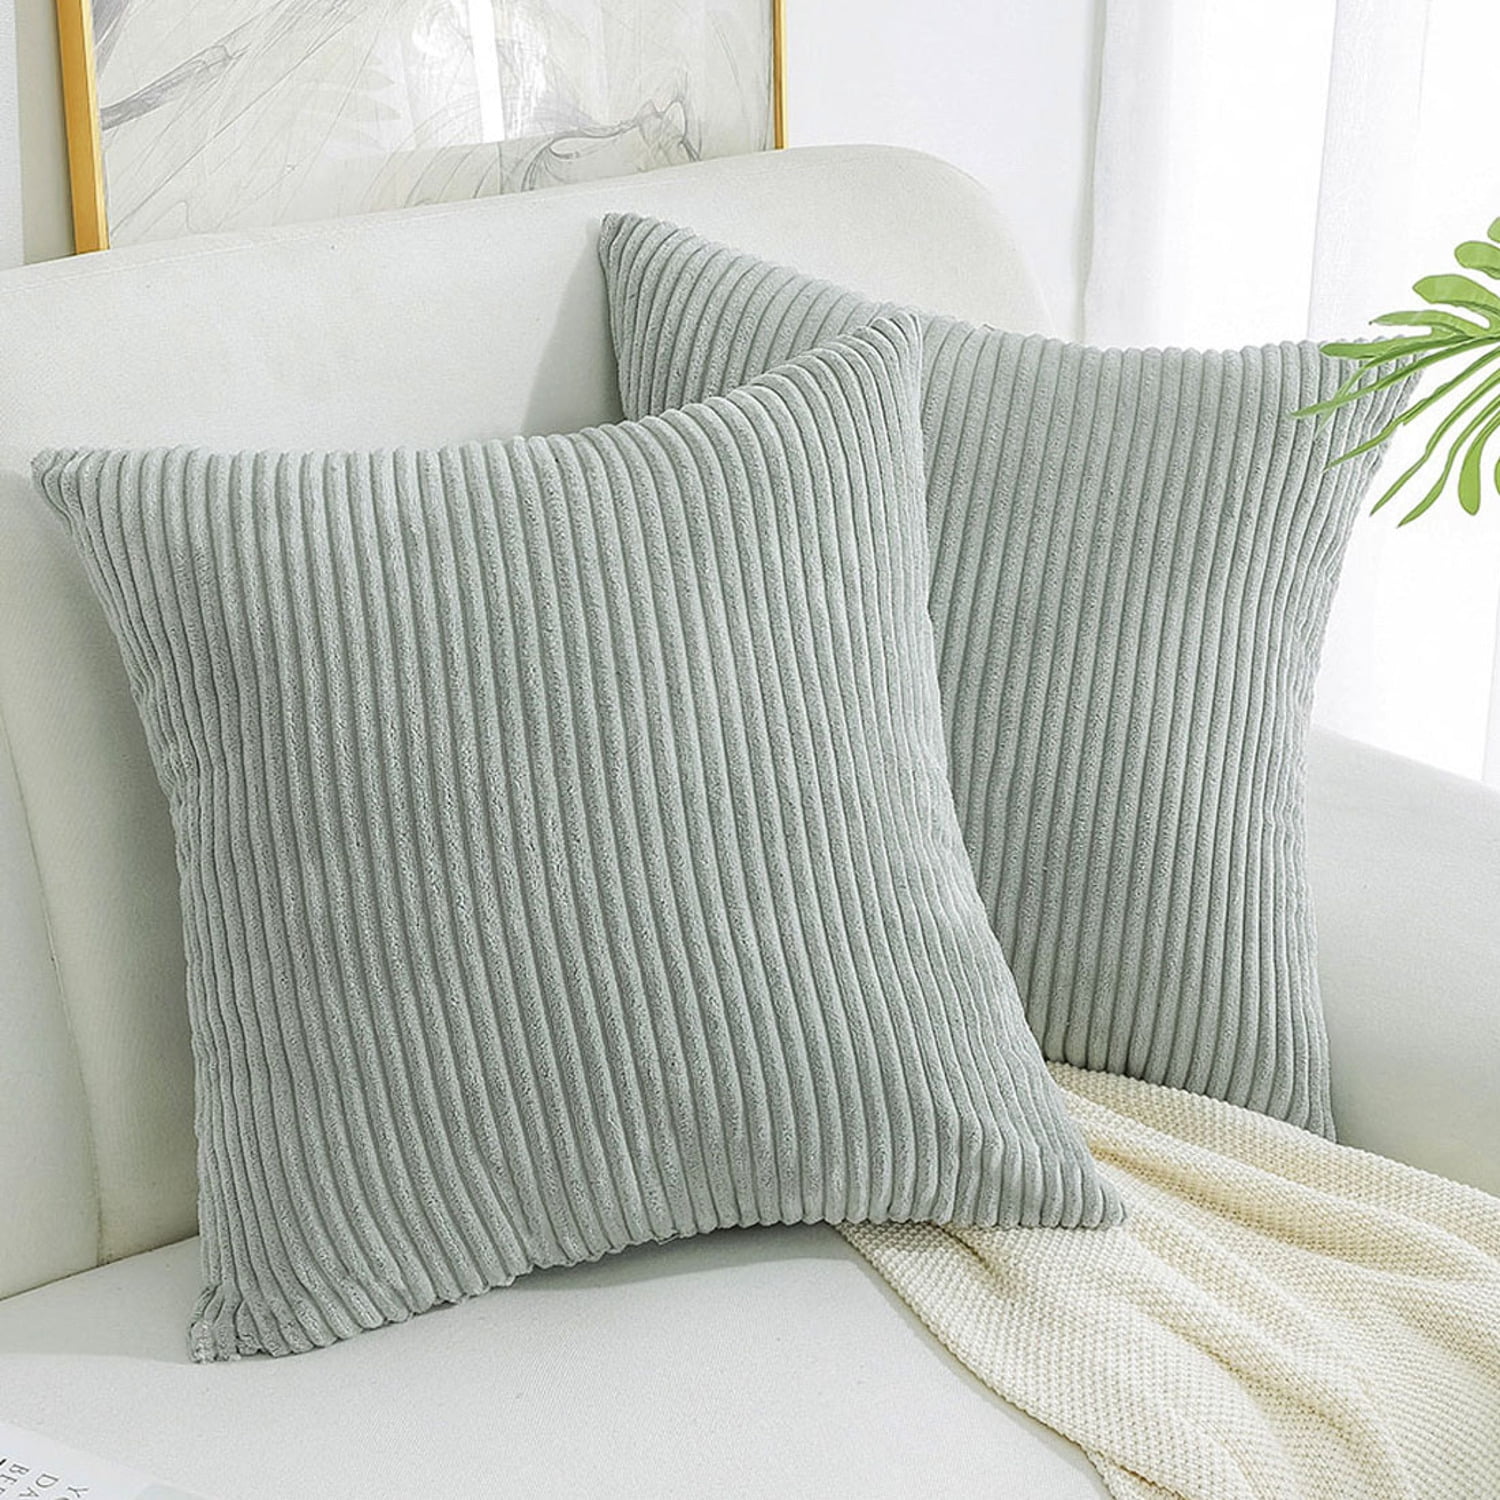 PiccoCasa 2Pcs Soft Corduroy Throw Pillow Covers, 20 x 20 Inch Striped Decorative Cushion Covers